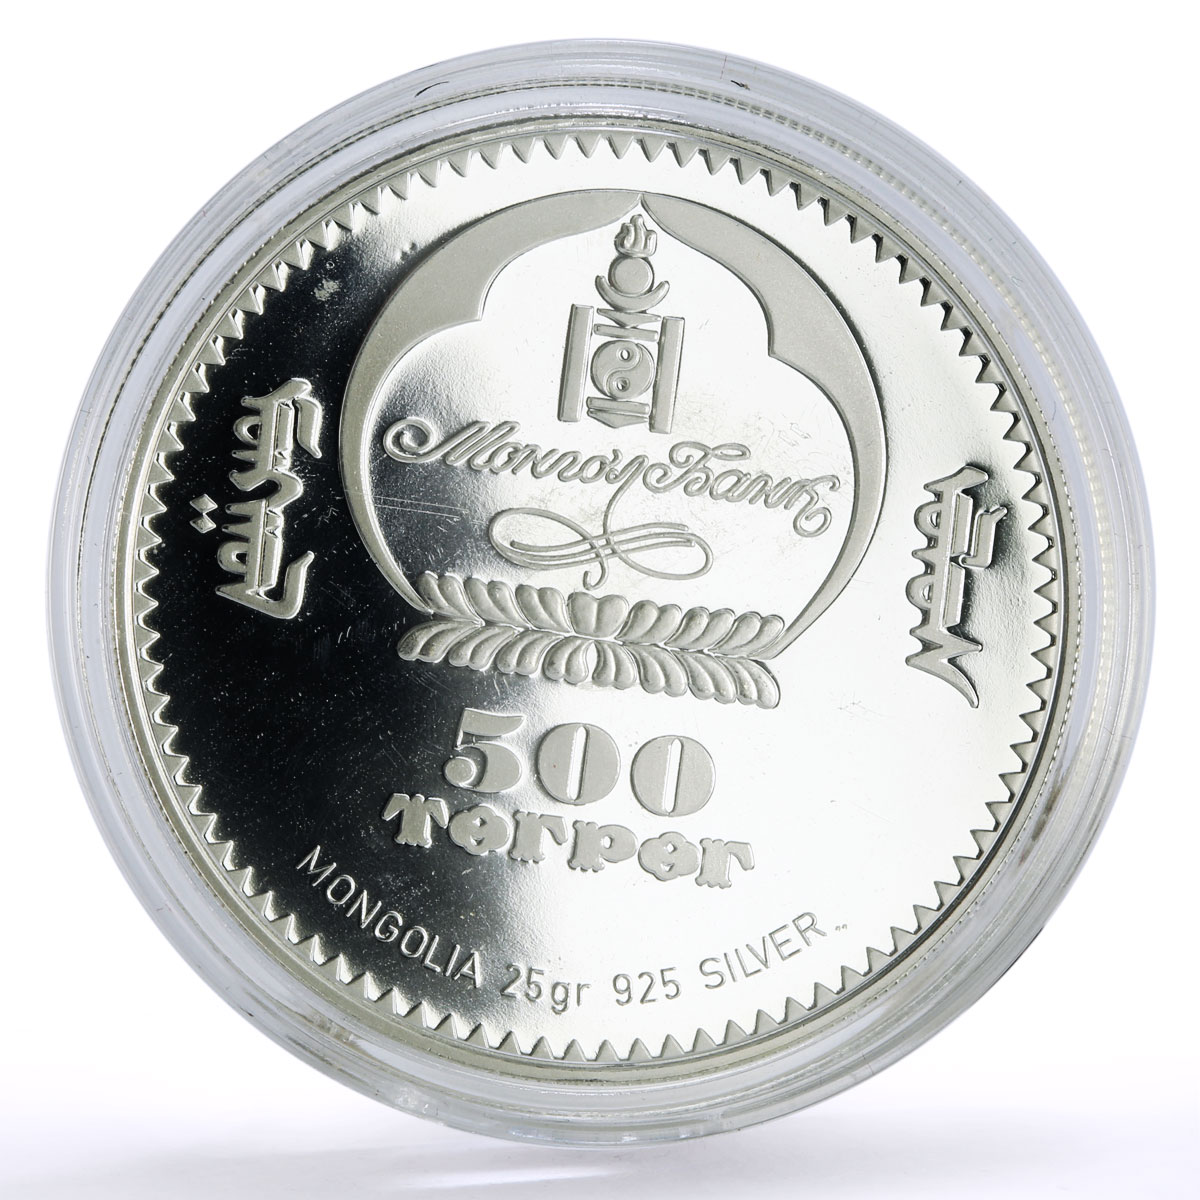 Mongolia 500 togrog New Wonders Peru Machu Picchu colored proof silver coin 2008